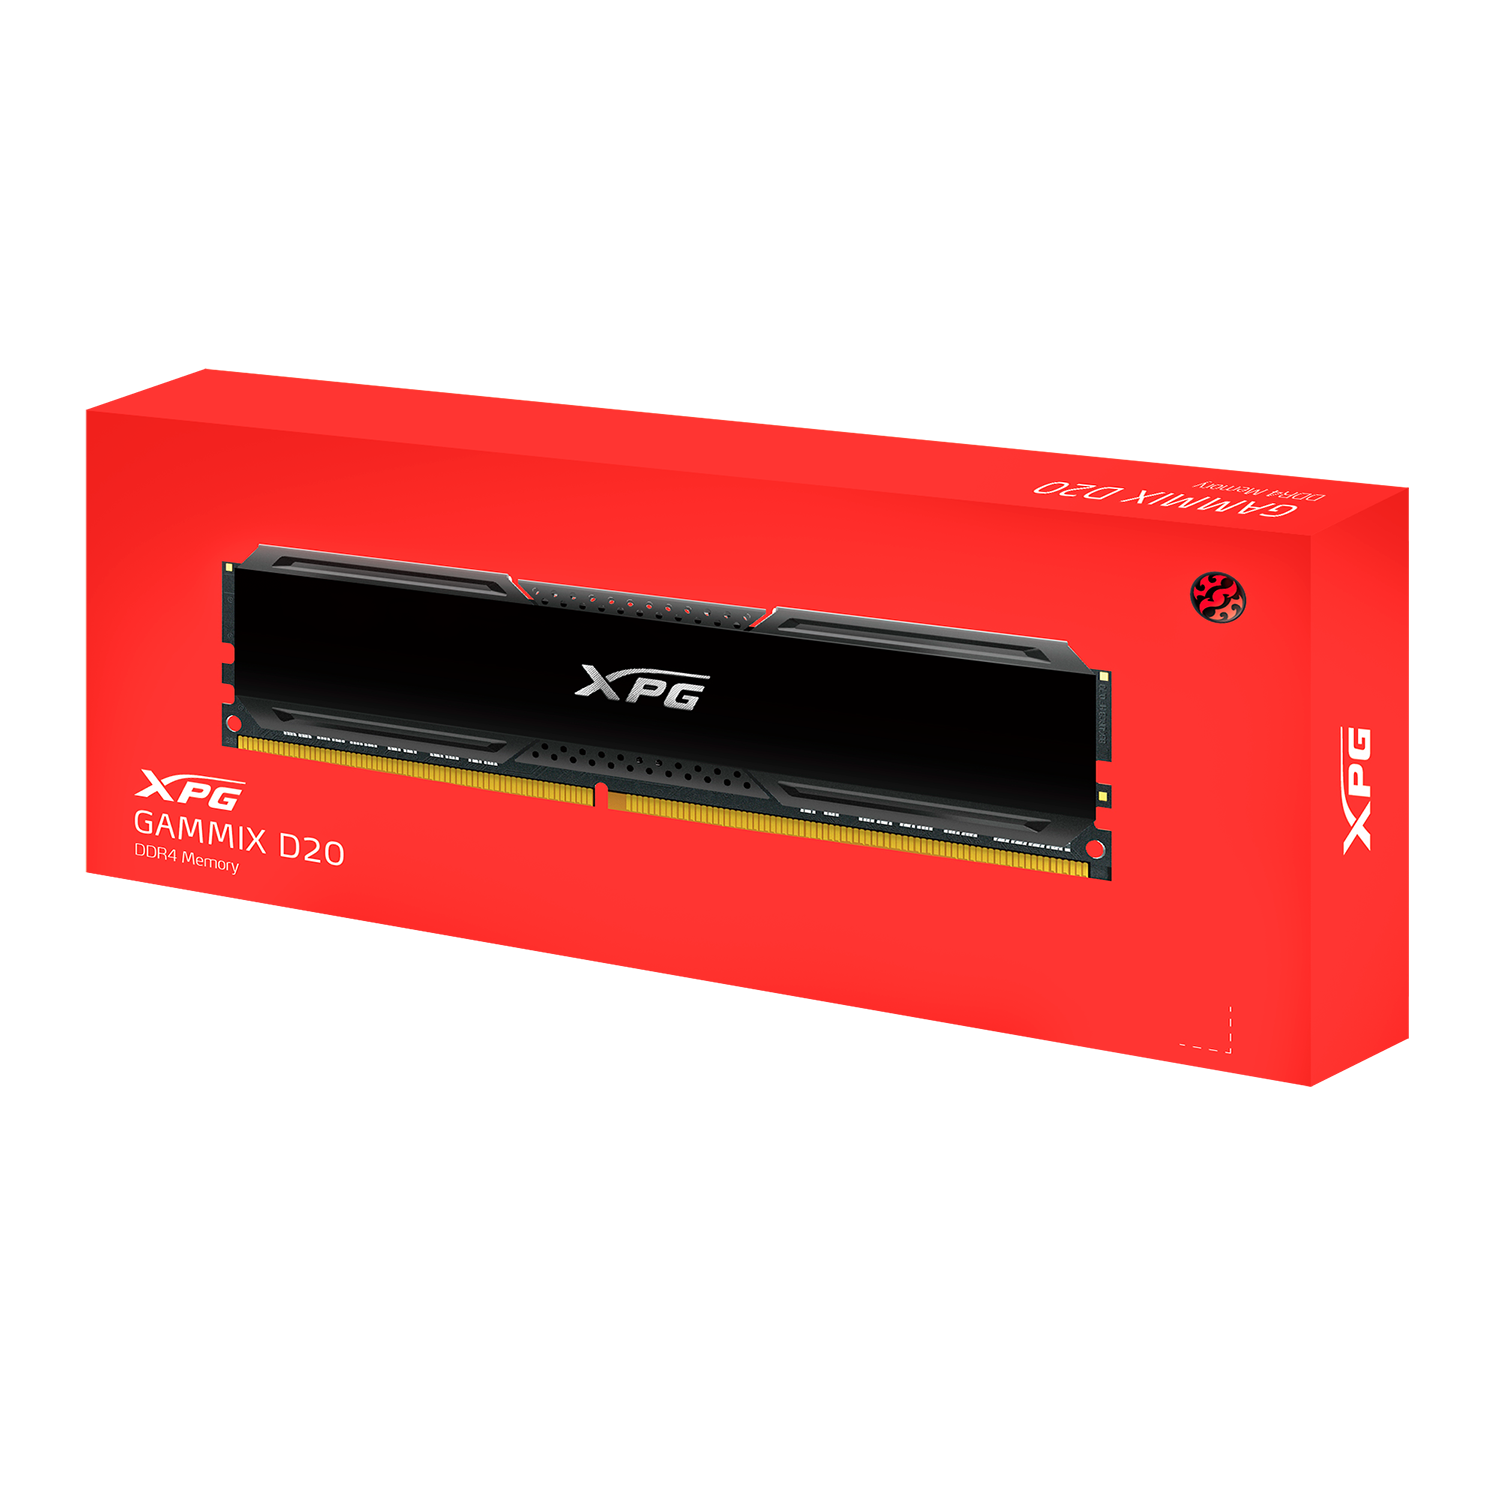 ADATA XPG GAMMIX D20 3600MHZ 8GB DDR4 RAM GREY - AX4U36008G18A-CTG20